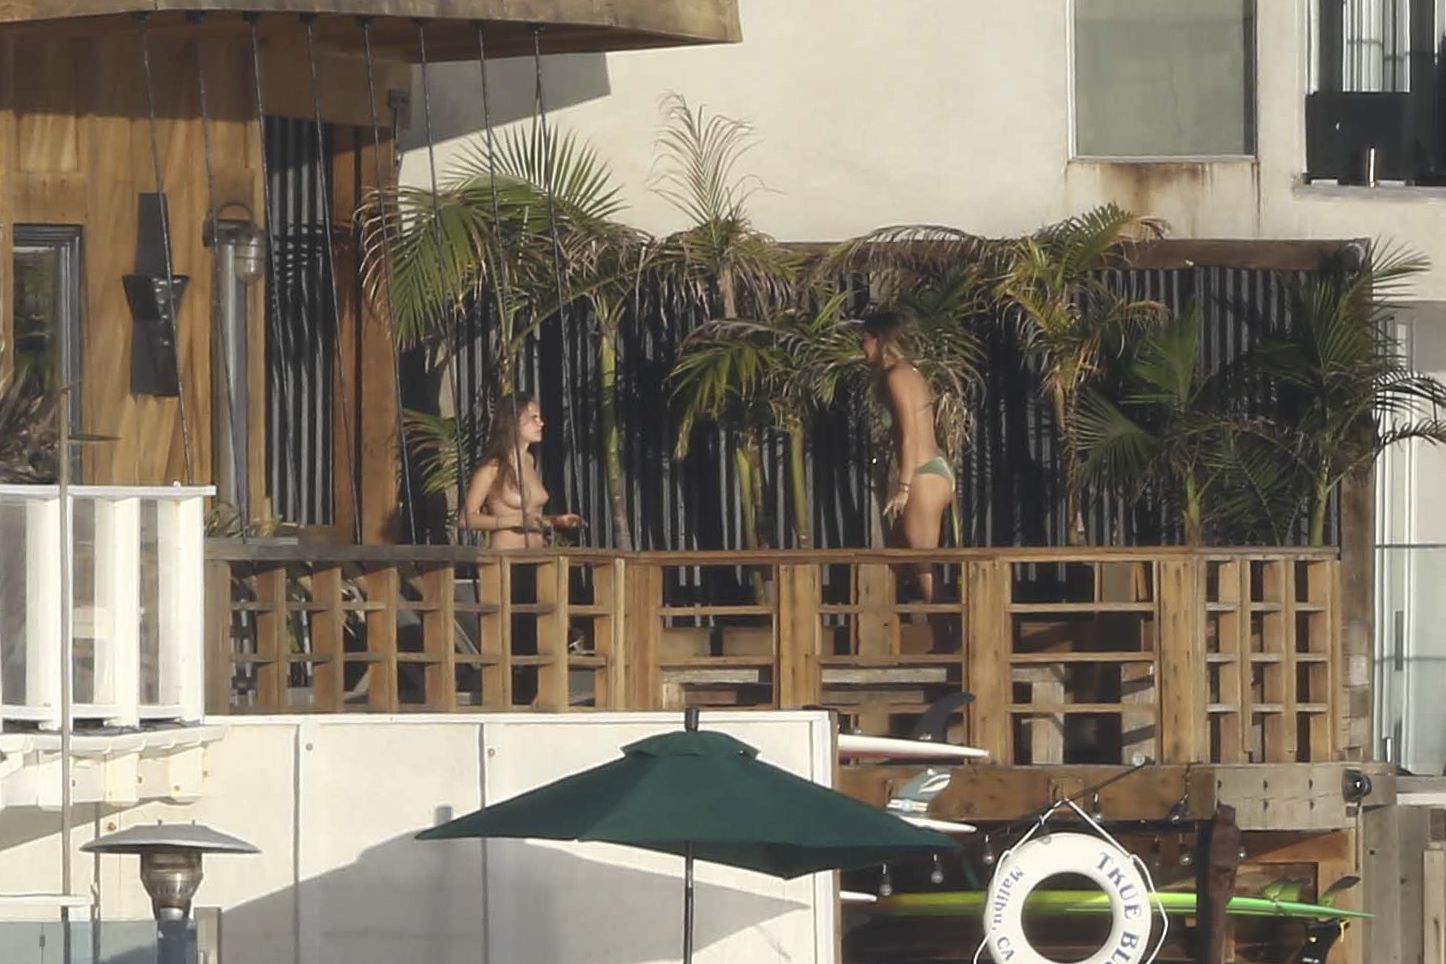 Cara_Delevingne_topless_on_a_balcony_in_Malibu_48x_HQ_36.jpg